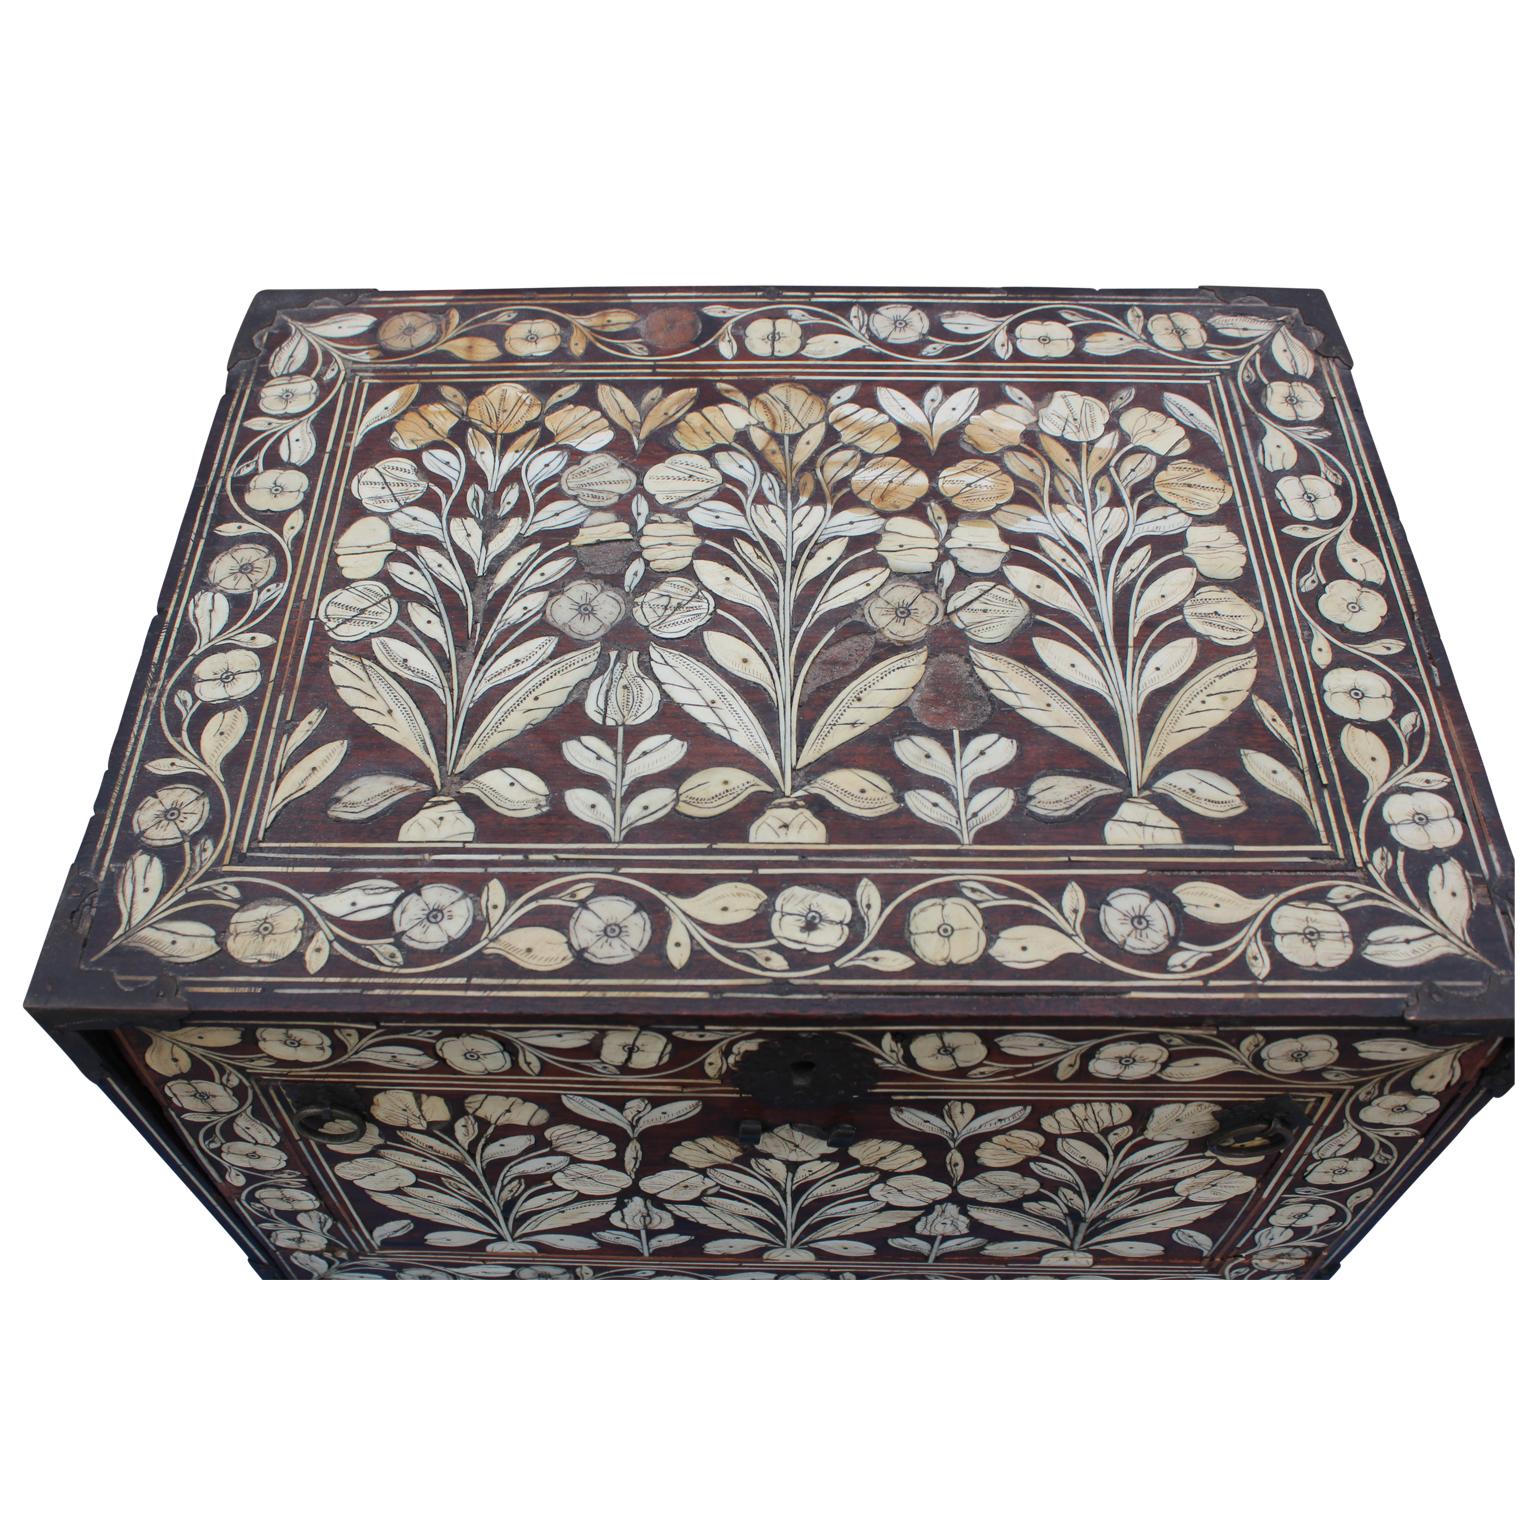 Beautiful Indo-Portuguese Mughal India Bone-Inlaid Fall Front Cabinet Box 2